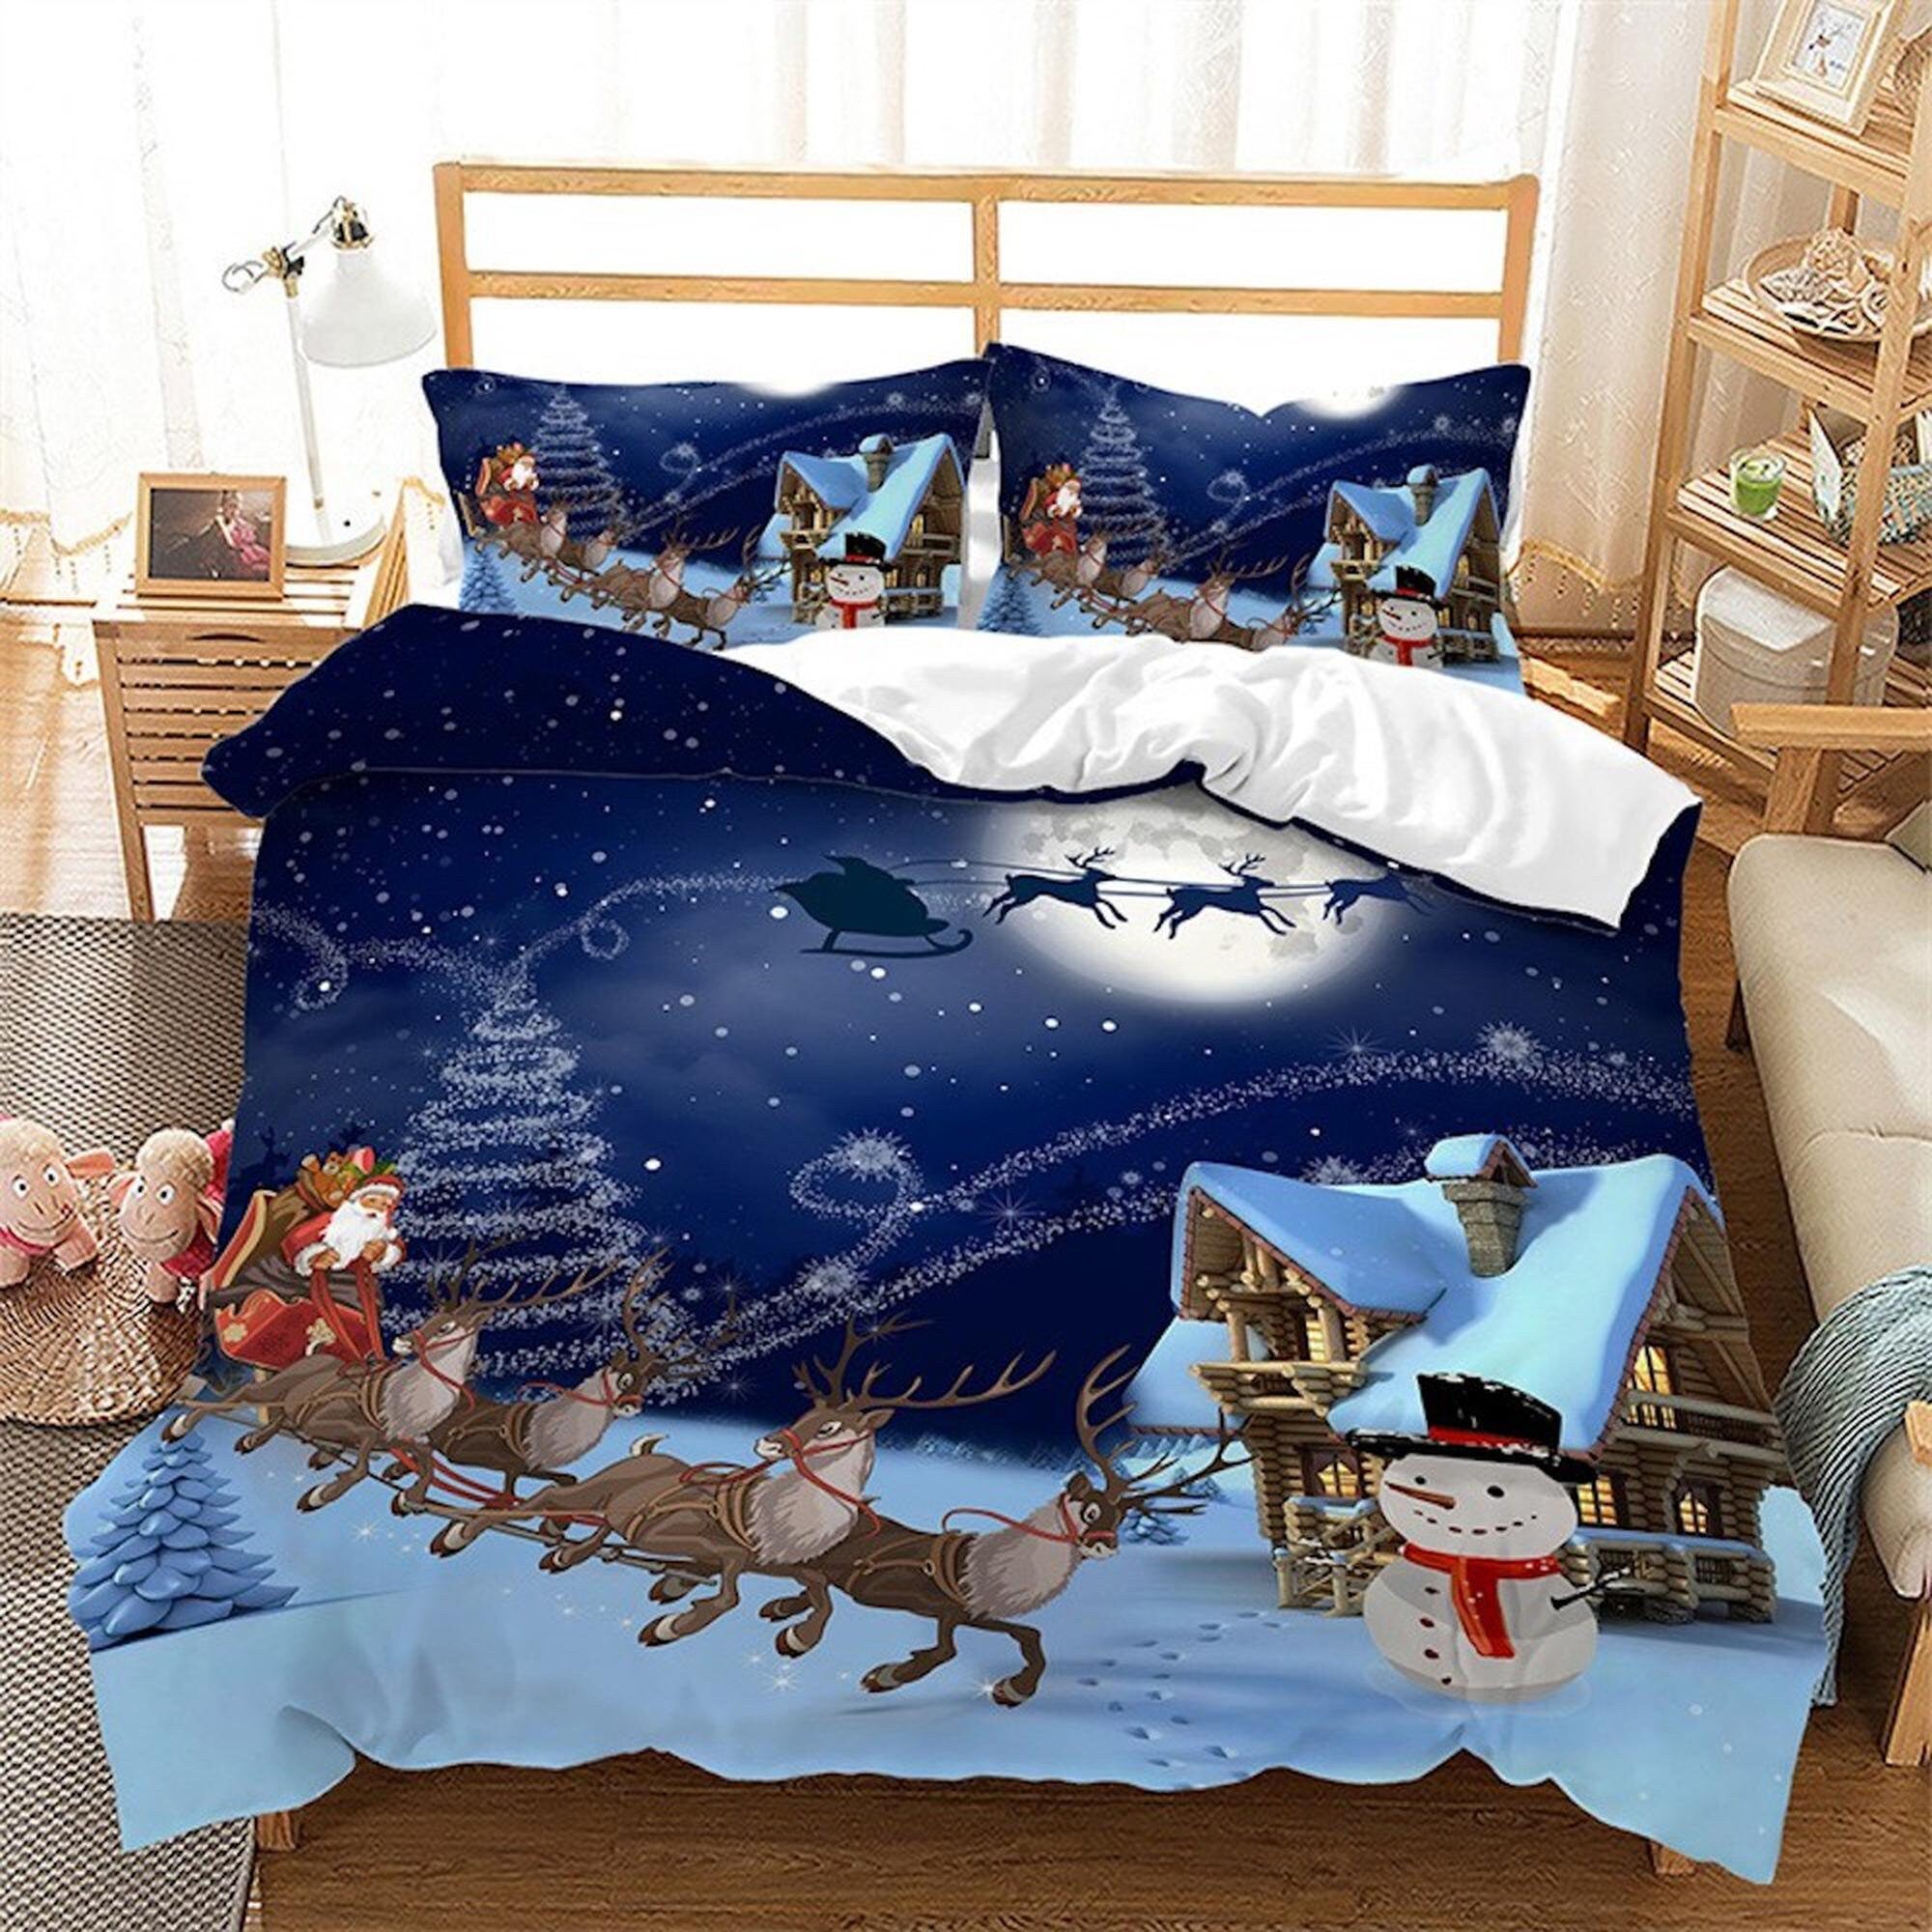 daintyduvet Santa Claus reindeer flying Christmas bedding, pillowcase holiday gift duvet cover king queen toddler bedding baby Christmas farmhouse decor